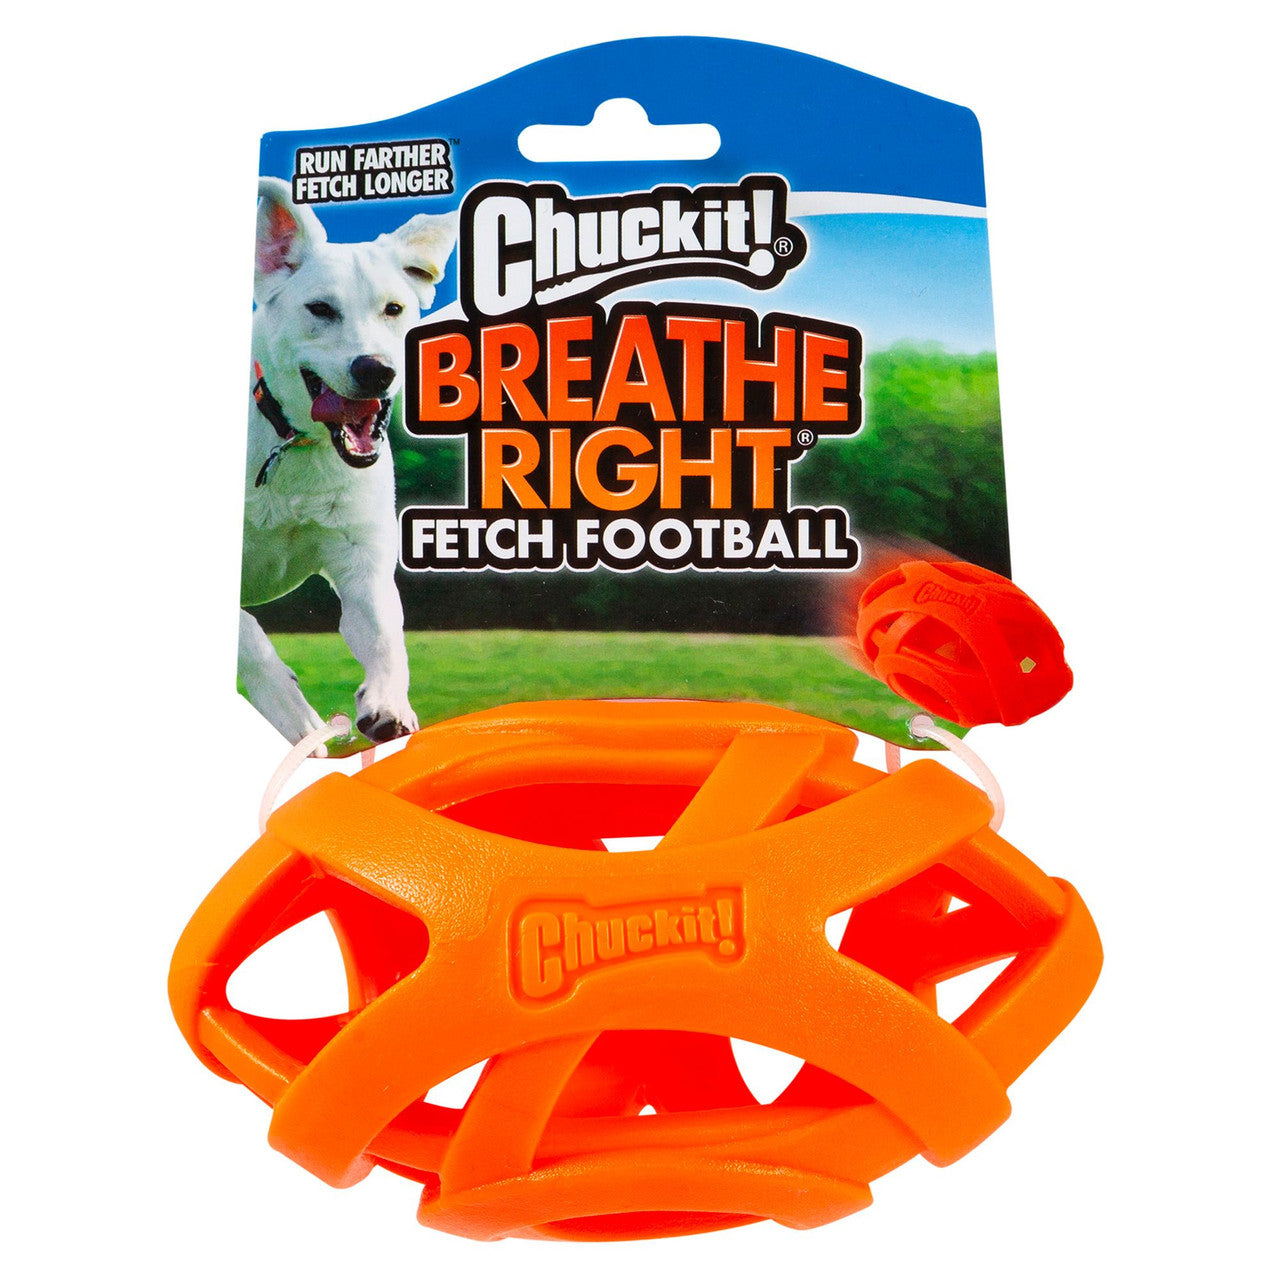 Chuckit! - Breathe Right Fetch Football